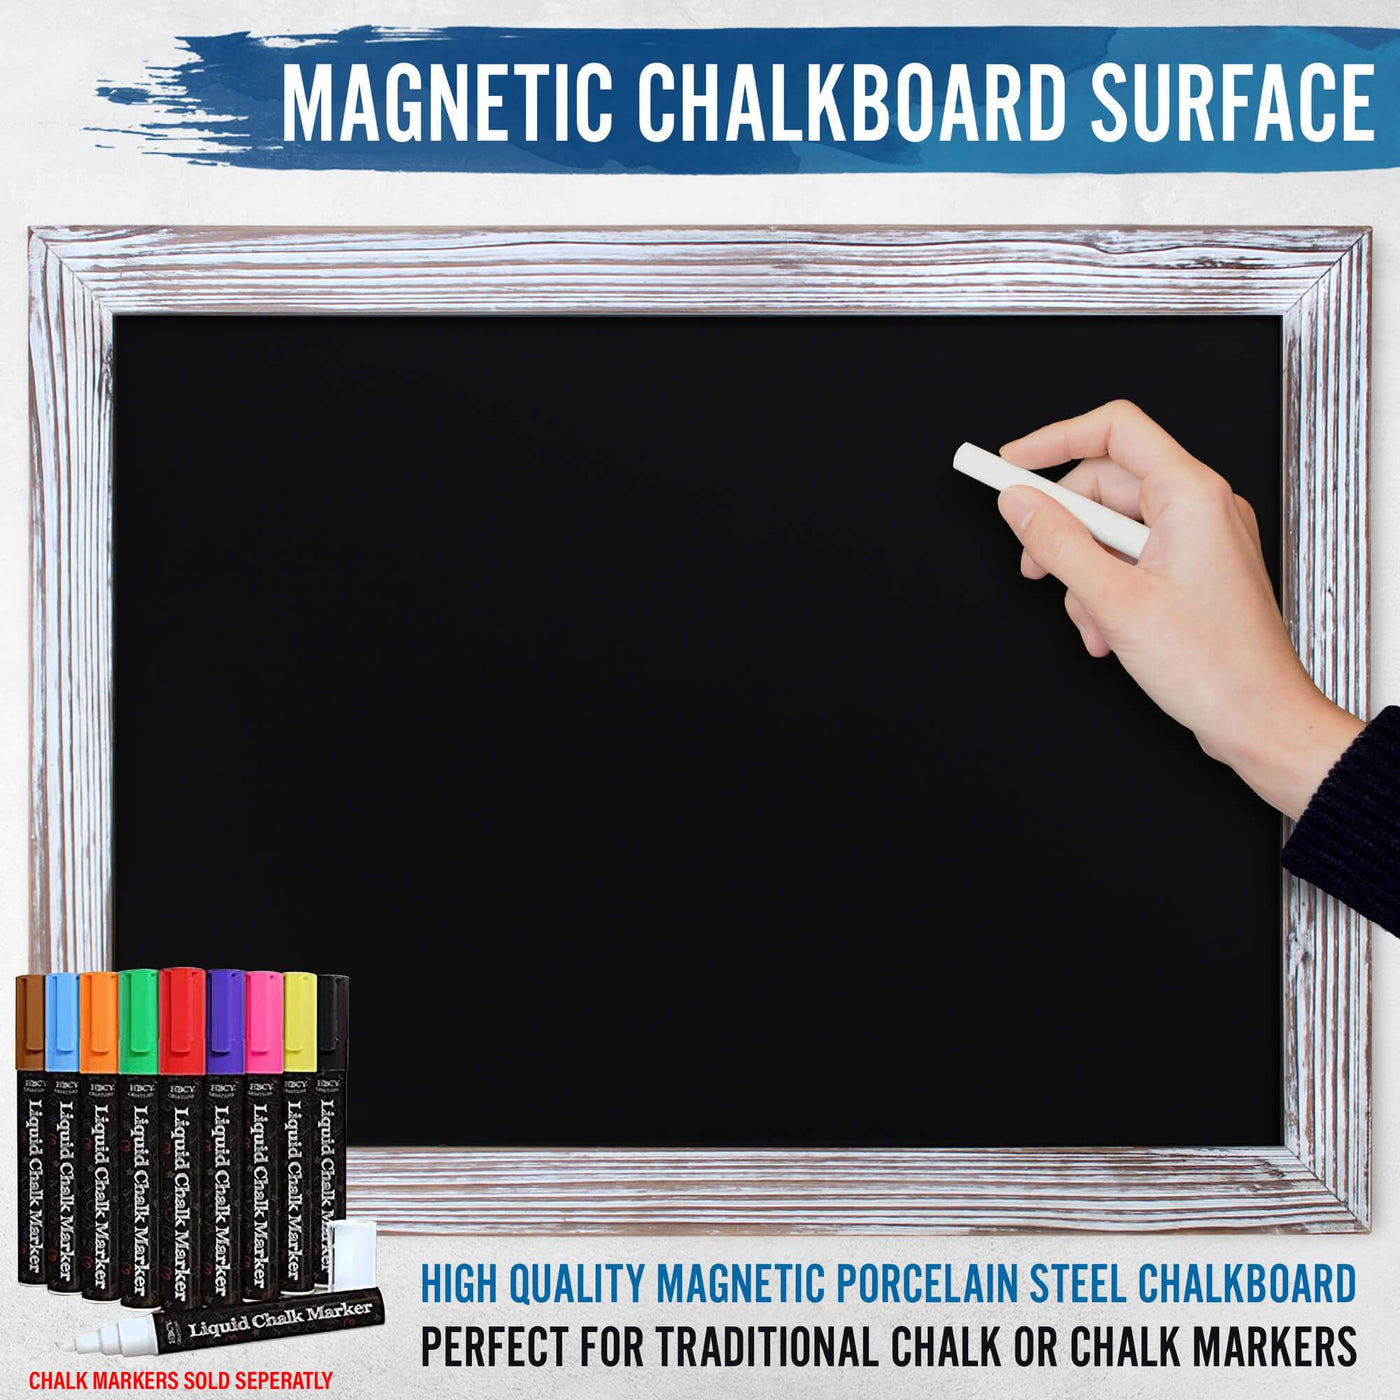 18" x 24" Rustic Magnetic Wall Chalkboard - MEDIUM